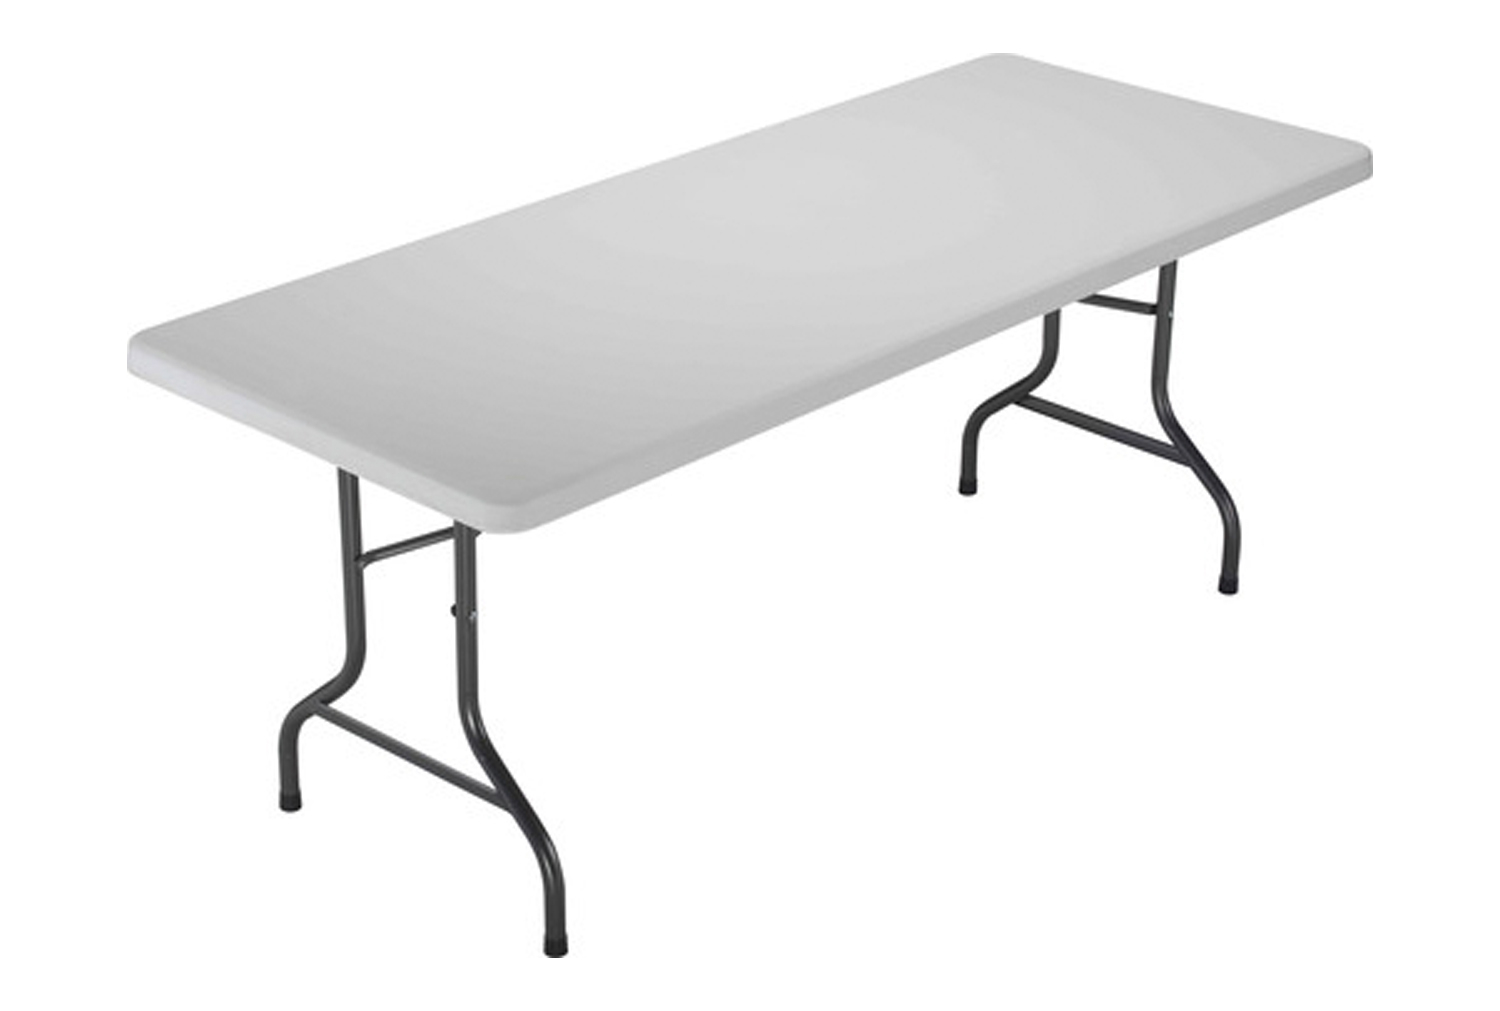 Bohan Plastic Rectangular Folding Table, 121wx60dx74h (cm), White